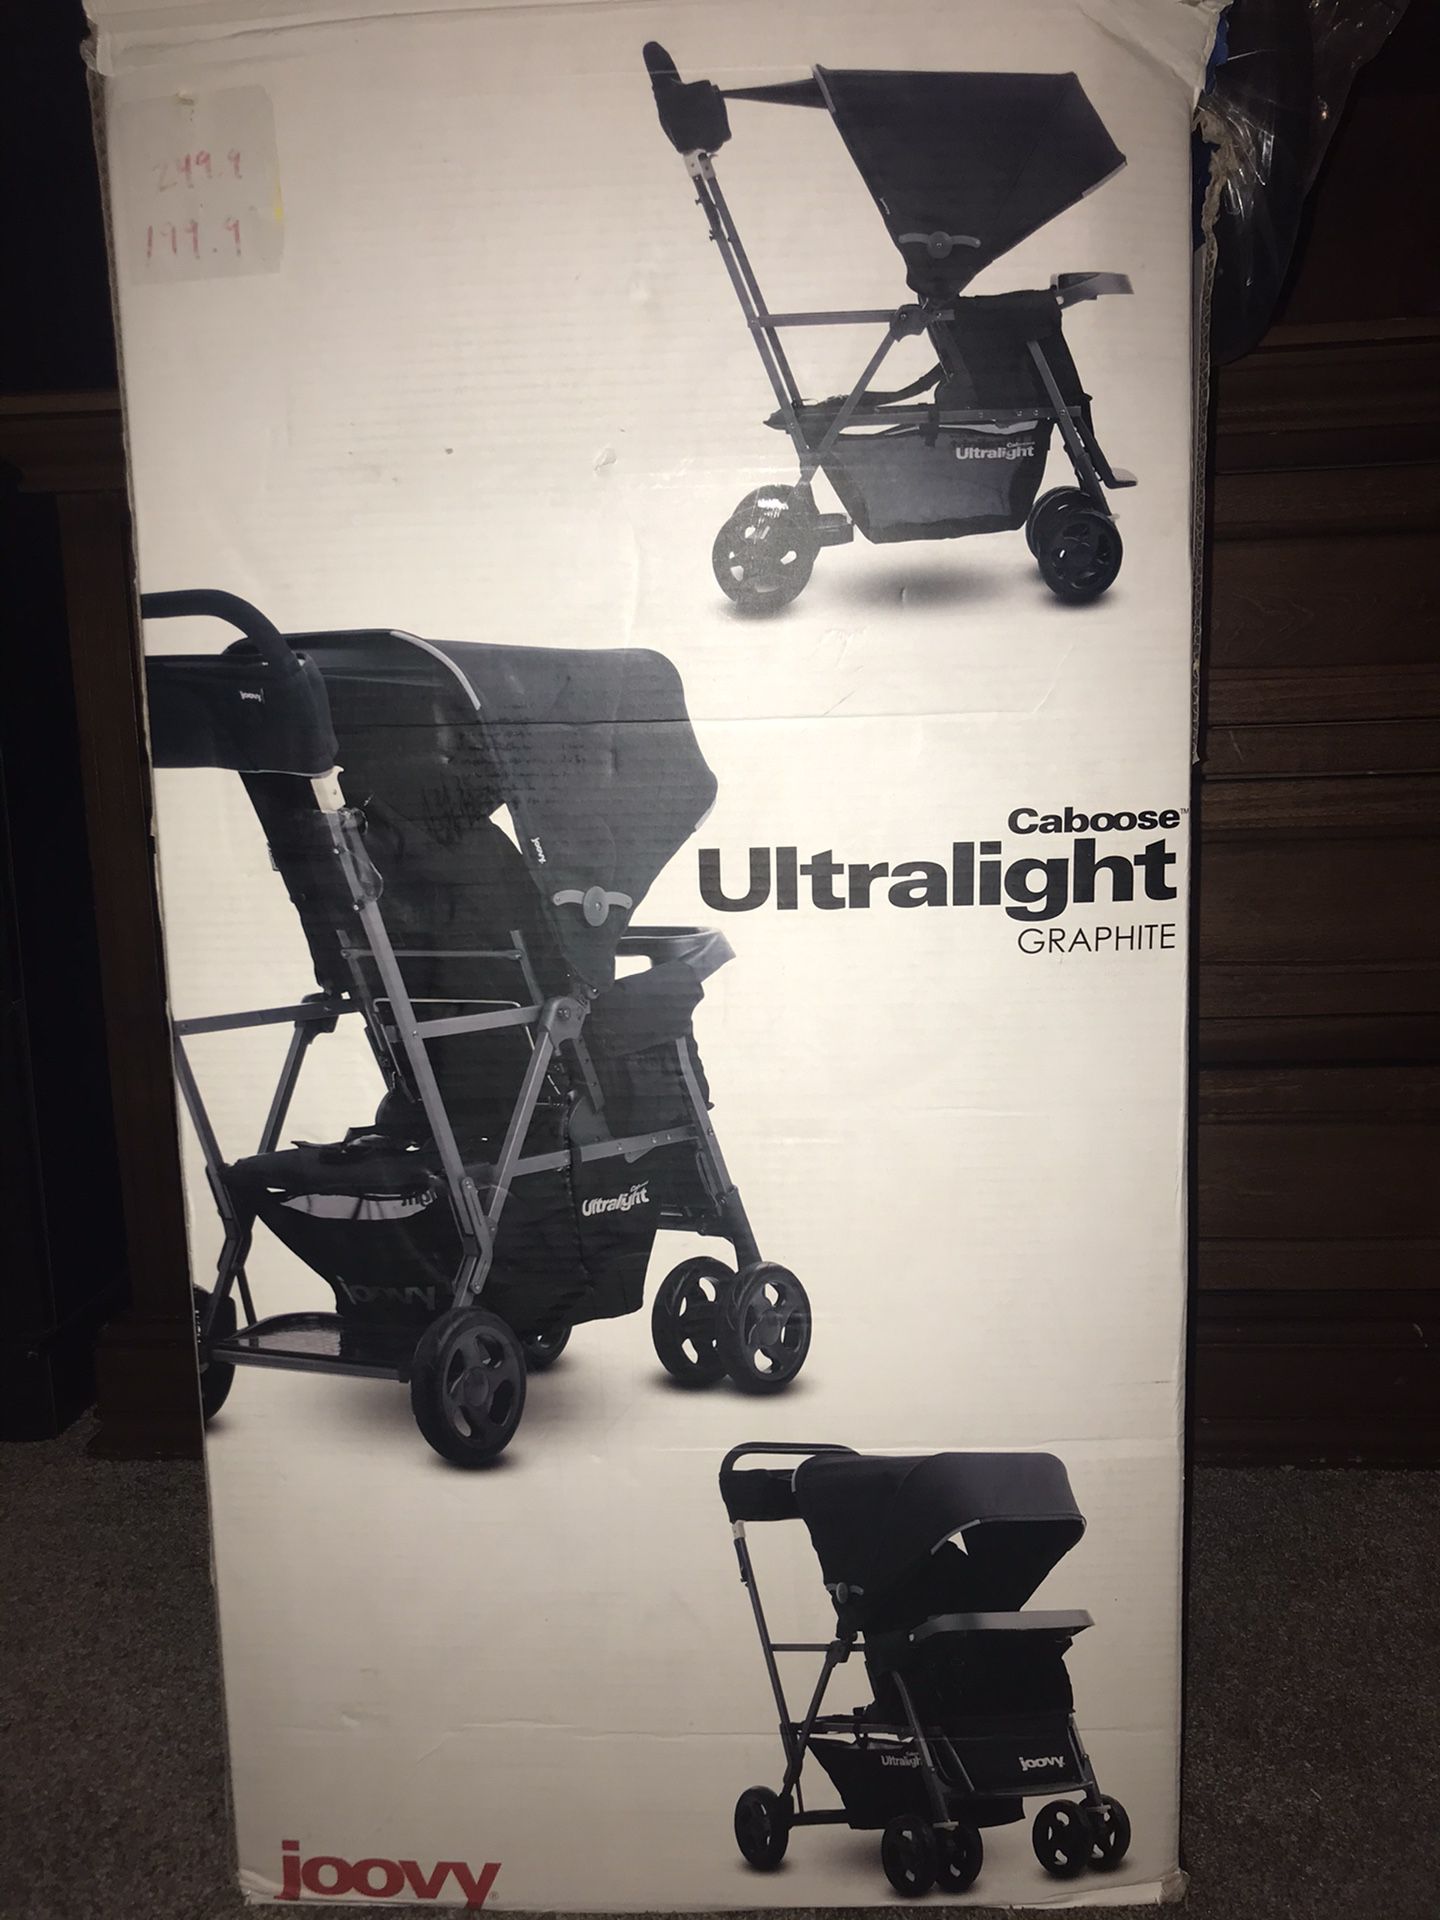 Joovy Ultralight Caboose double stroller